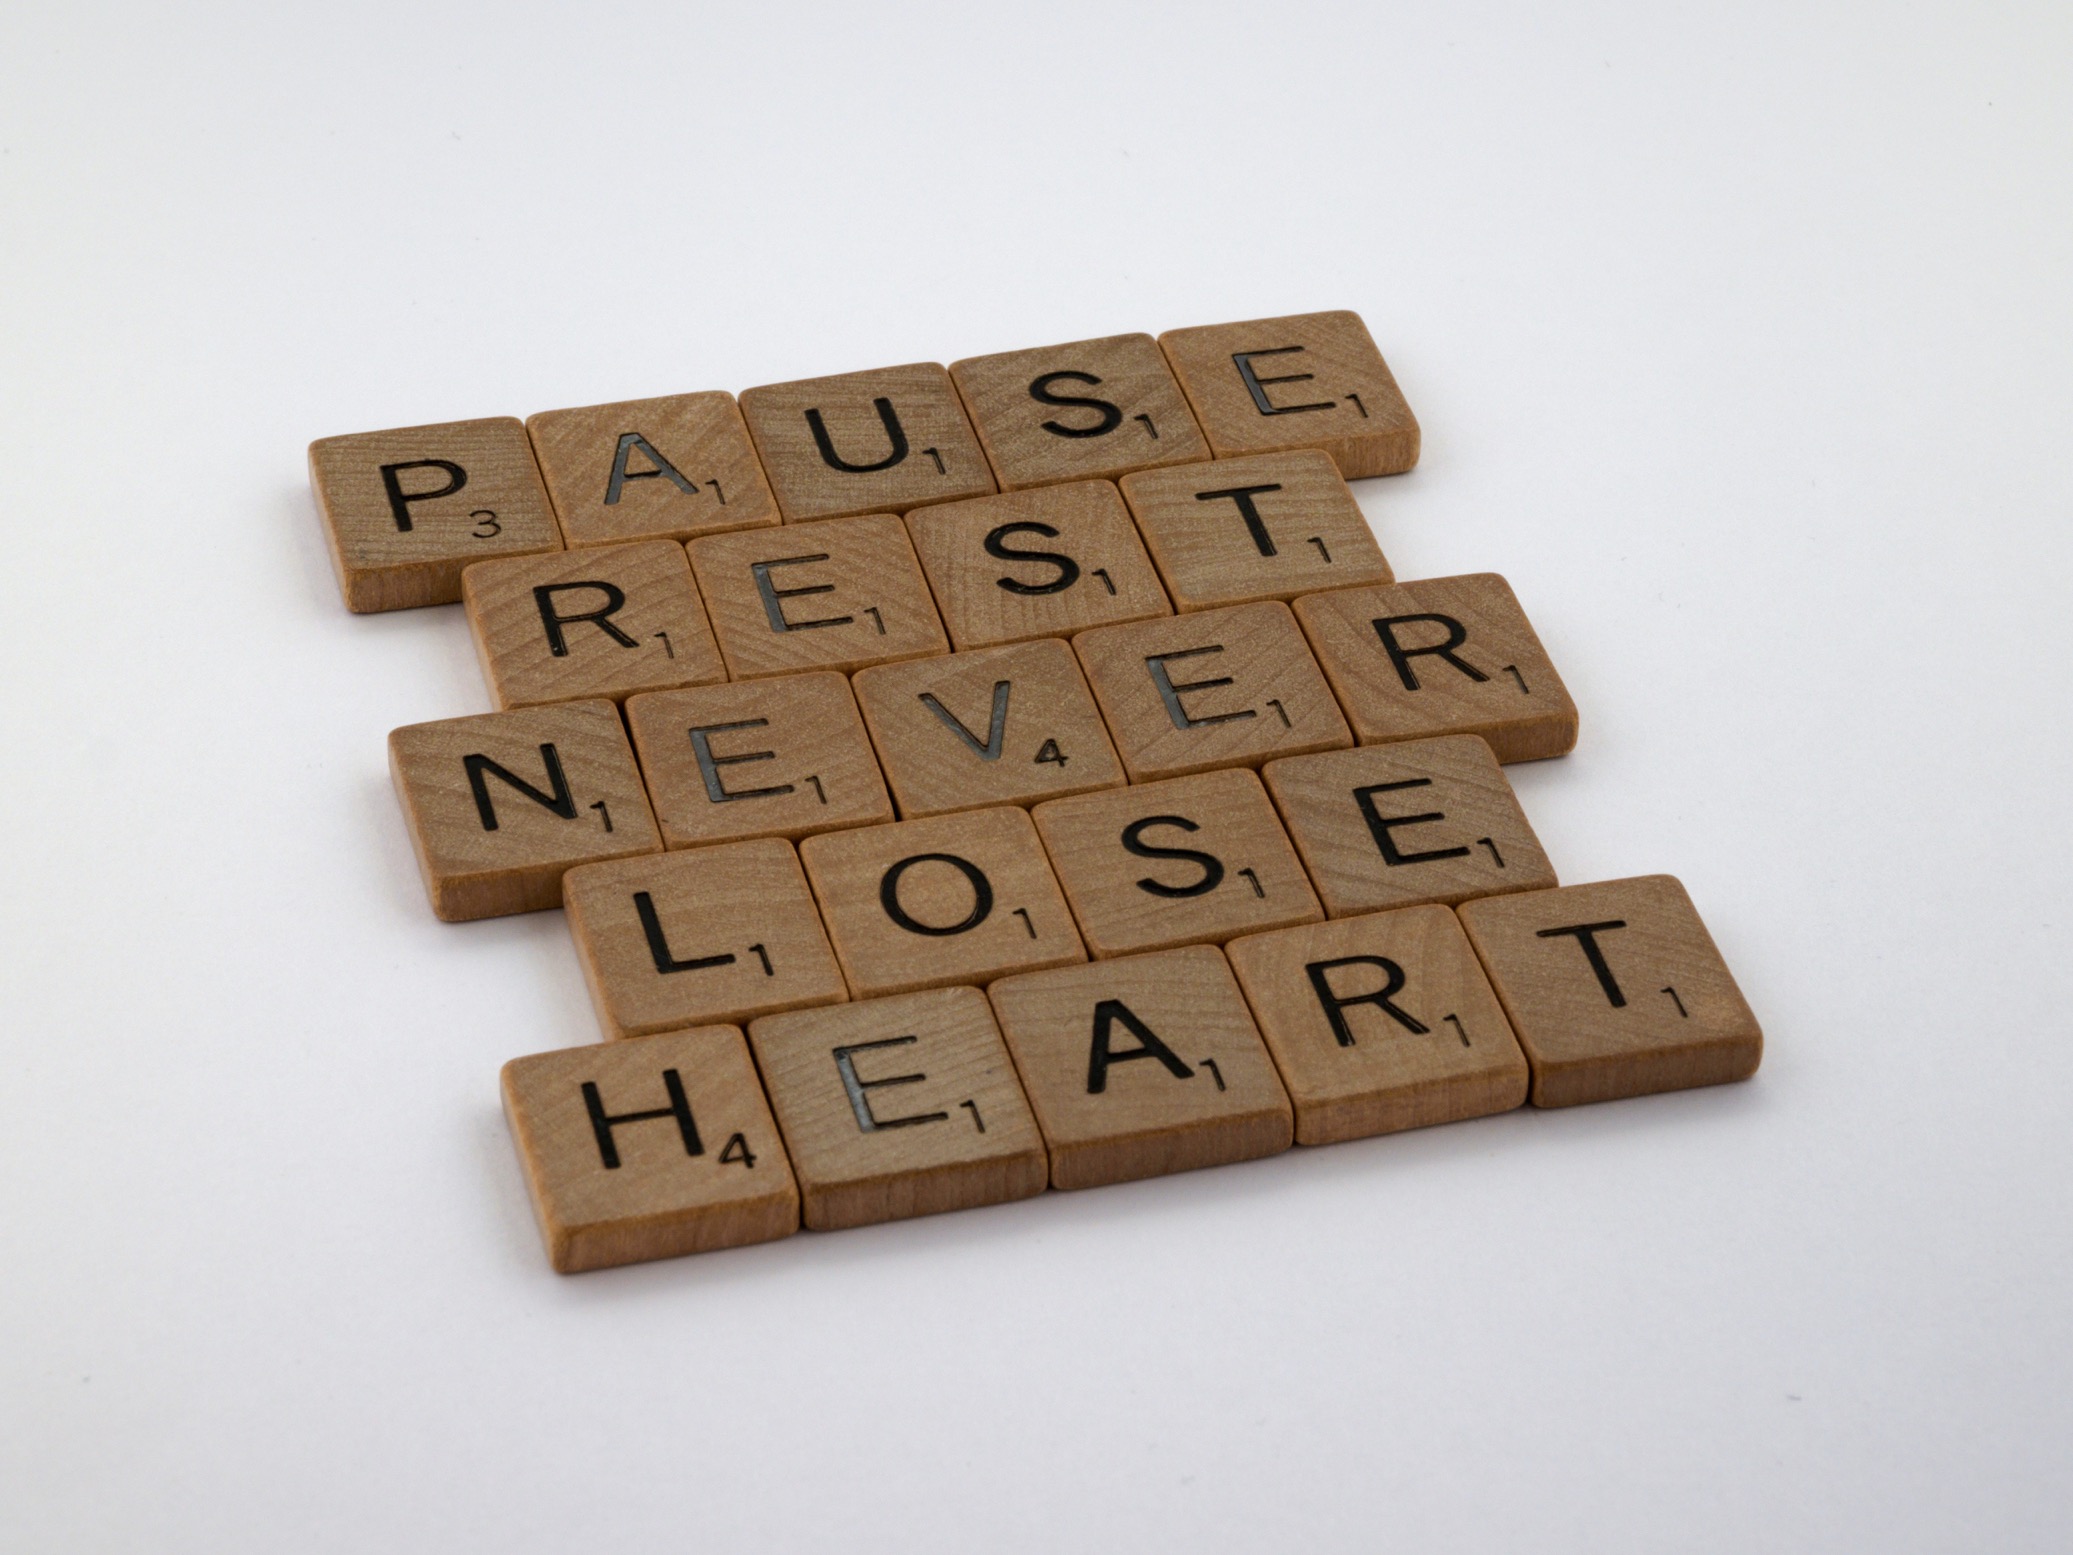 "Pause, Rest, Never Lose Heart" in scrabble blocks